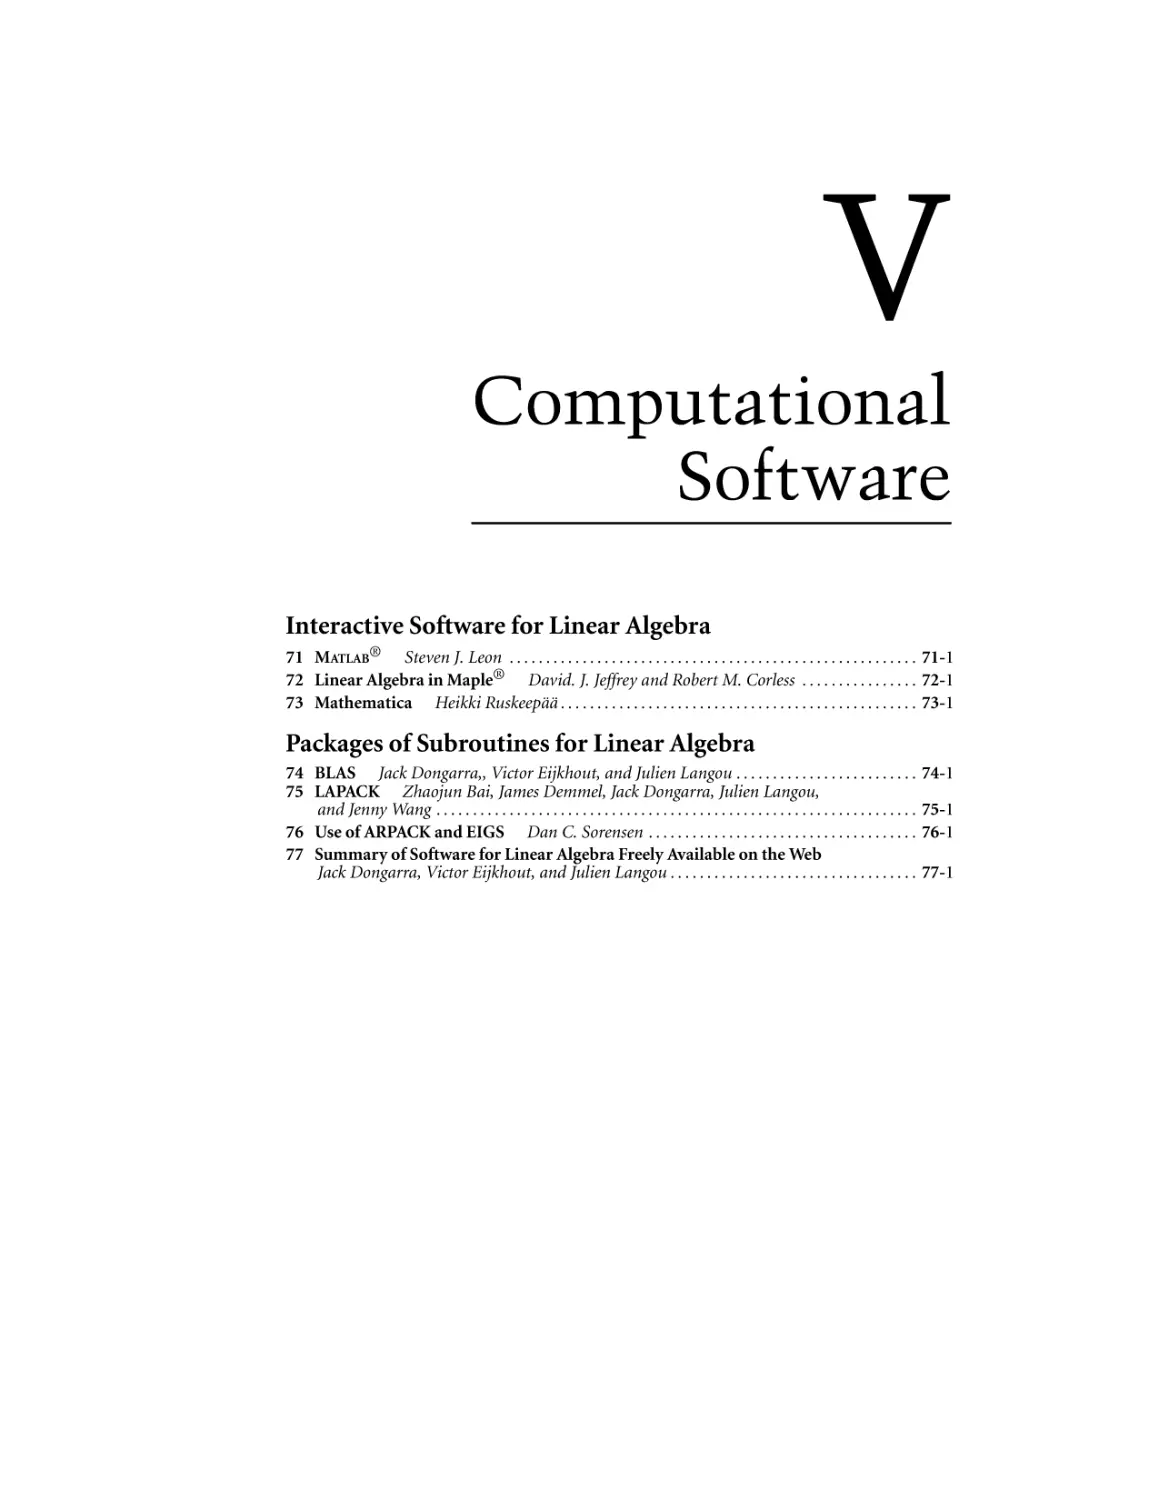 Part V. Computational Software